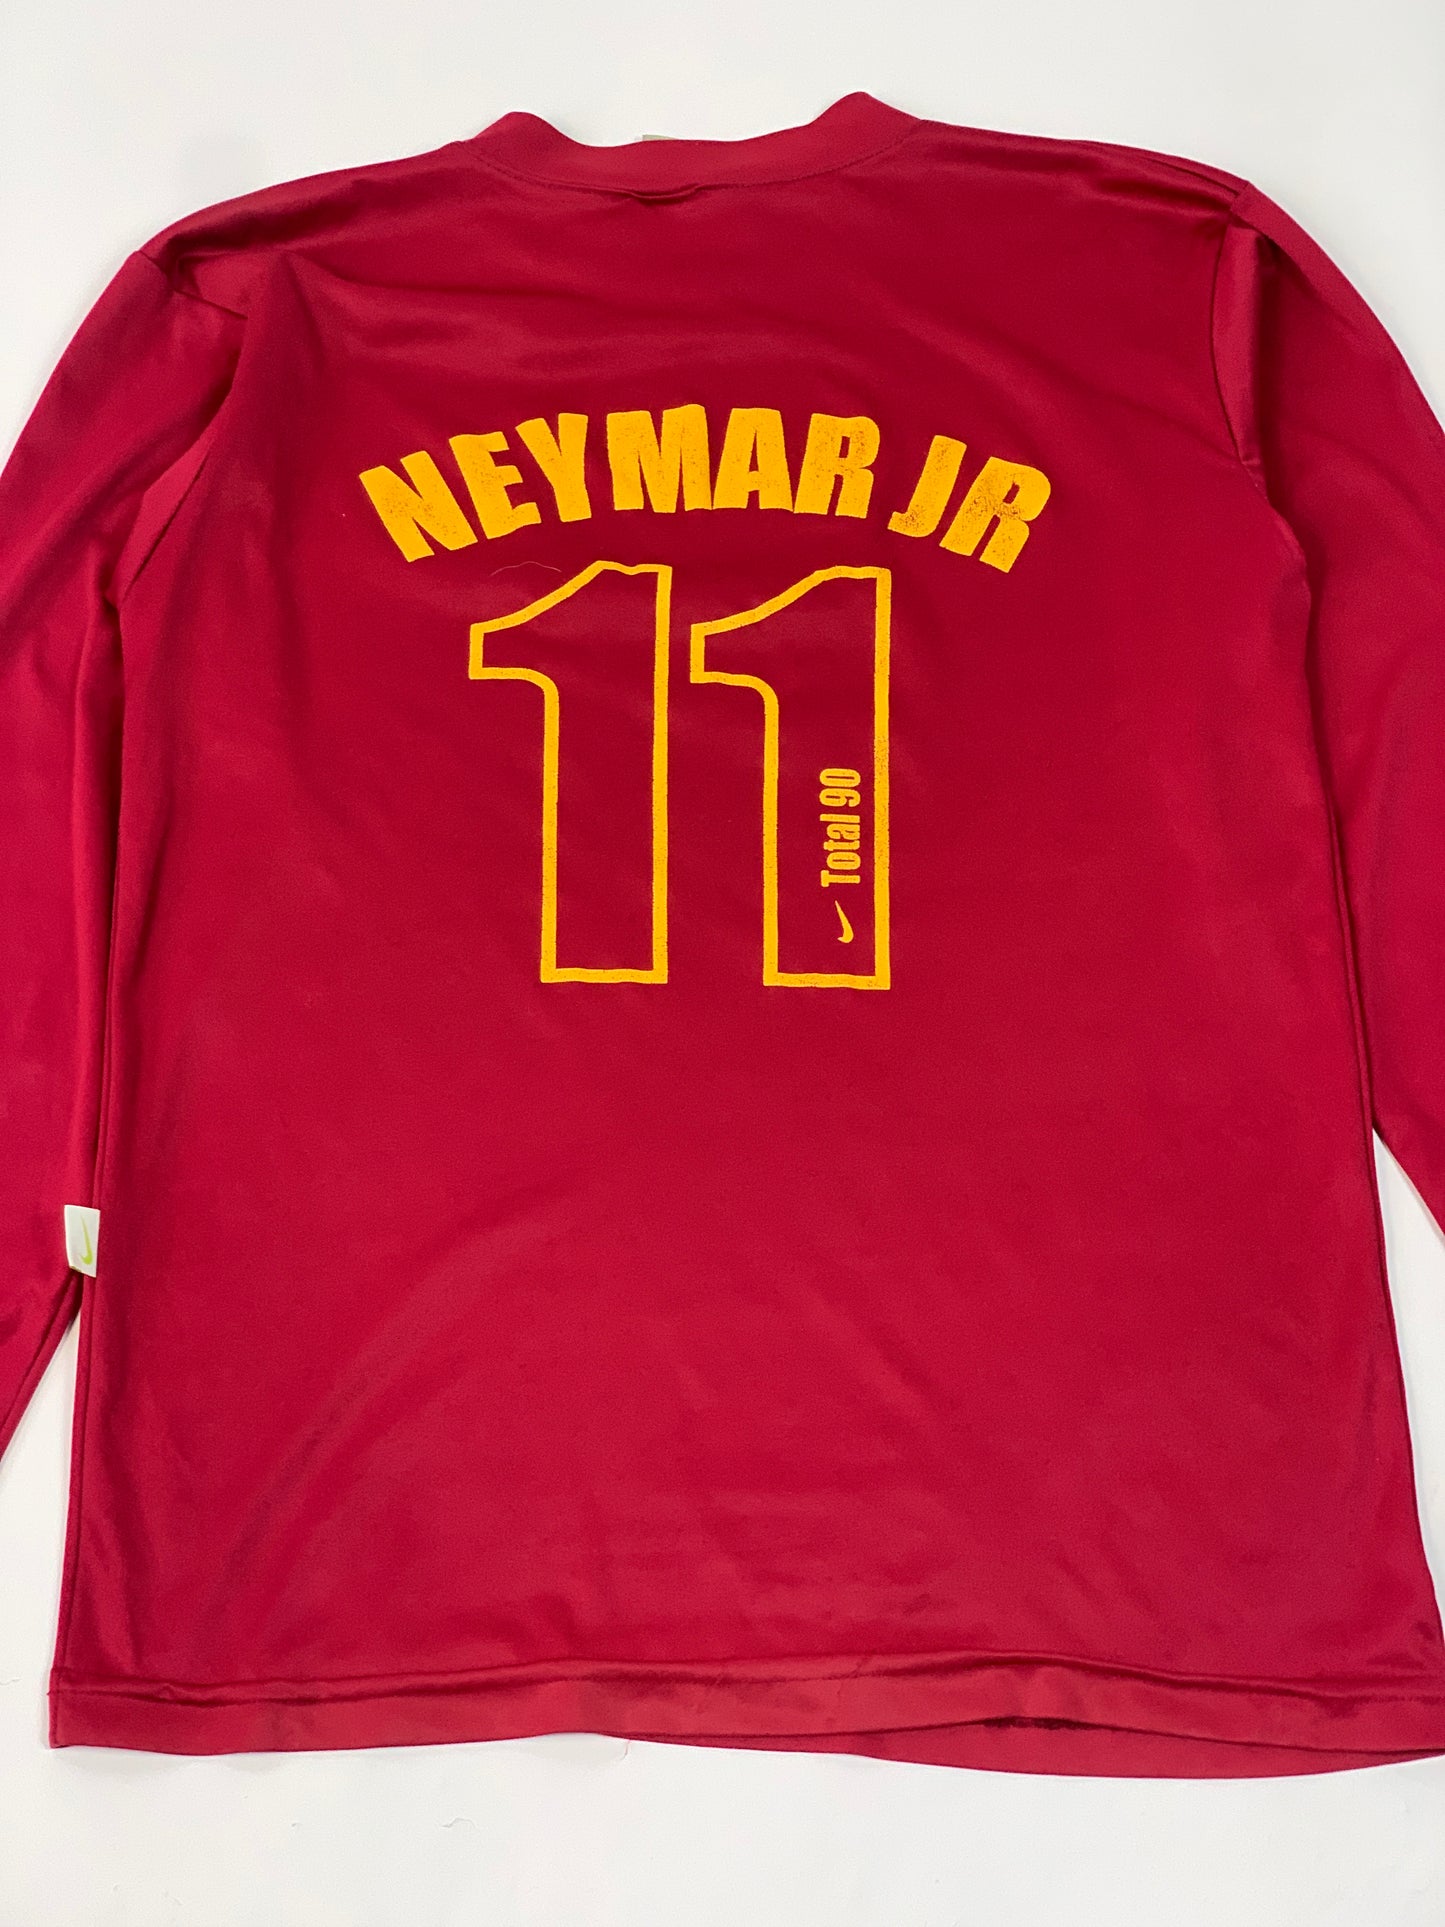 Playera Nike Total90 Barcelona Neymar Jr. - S